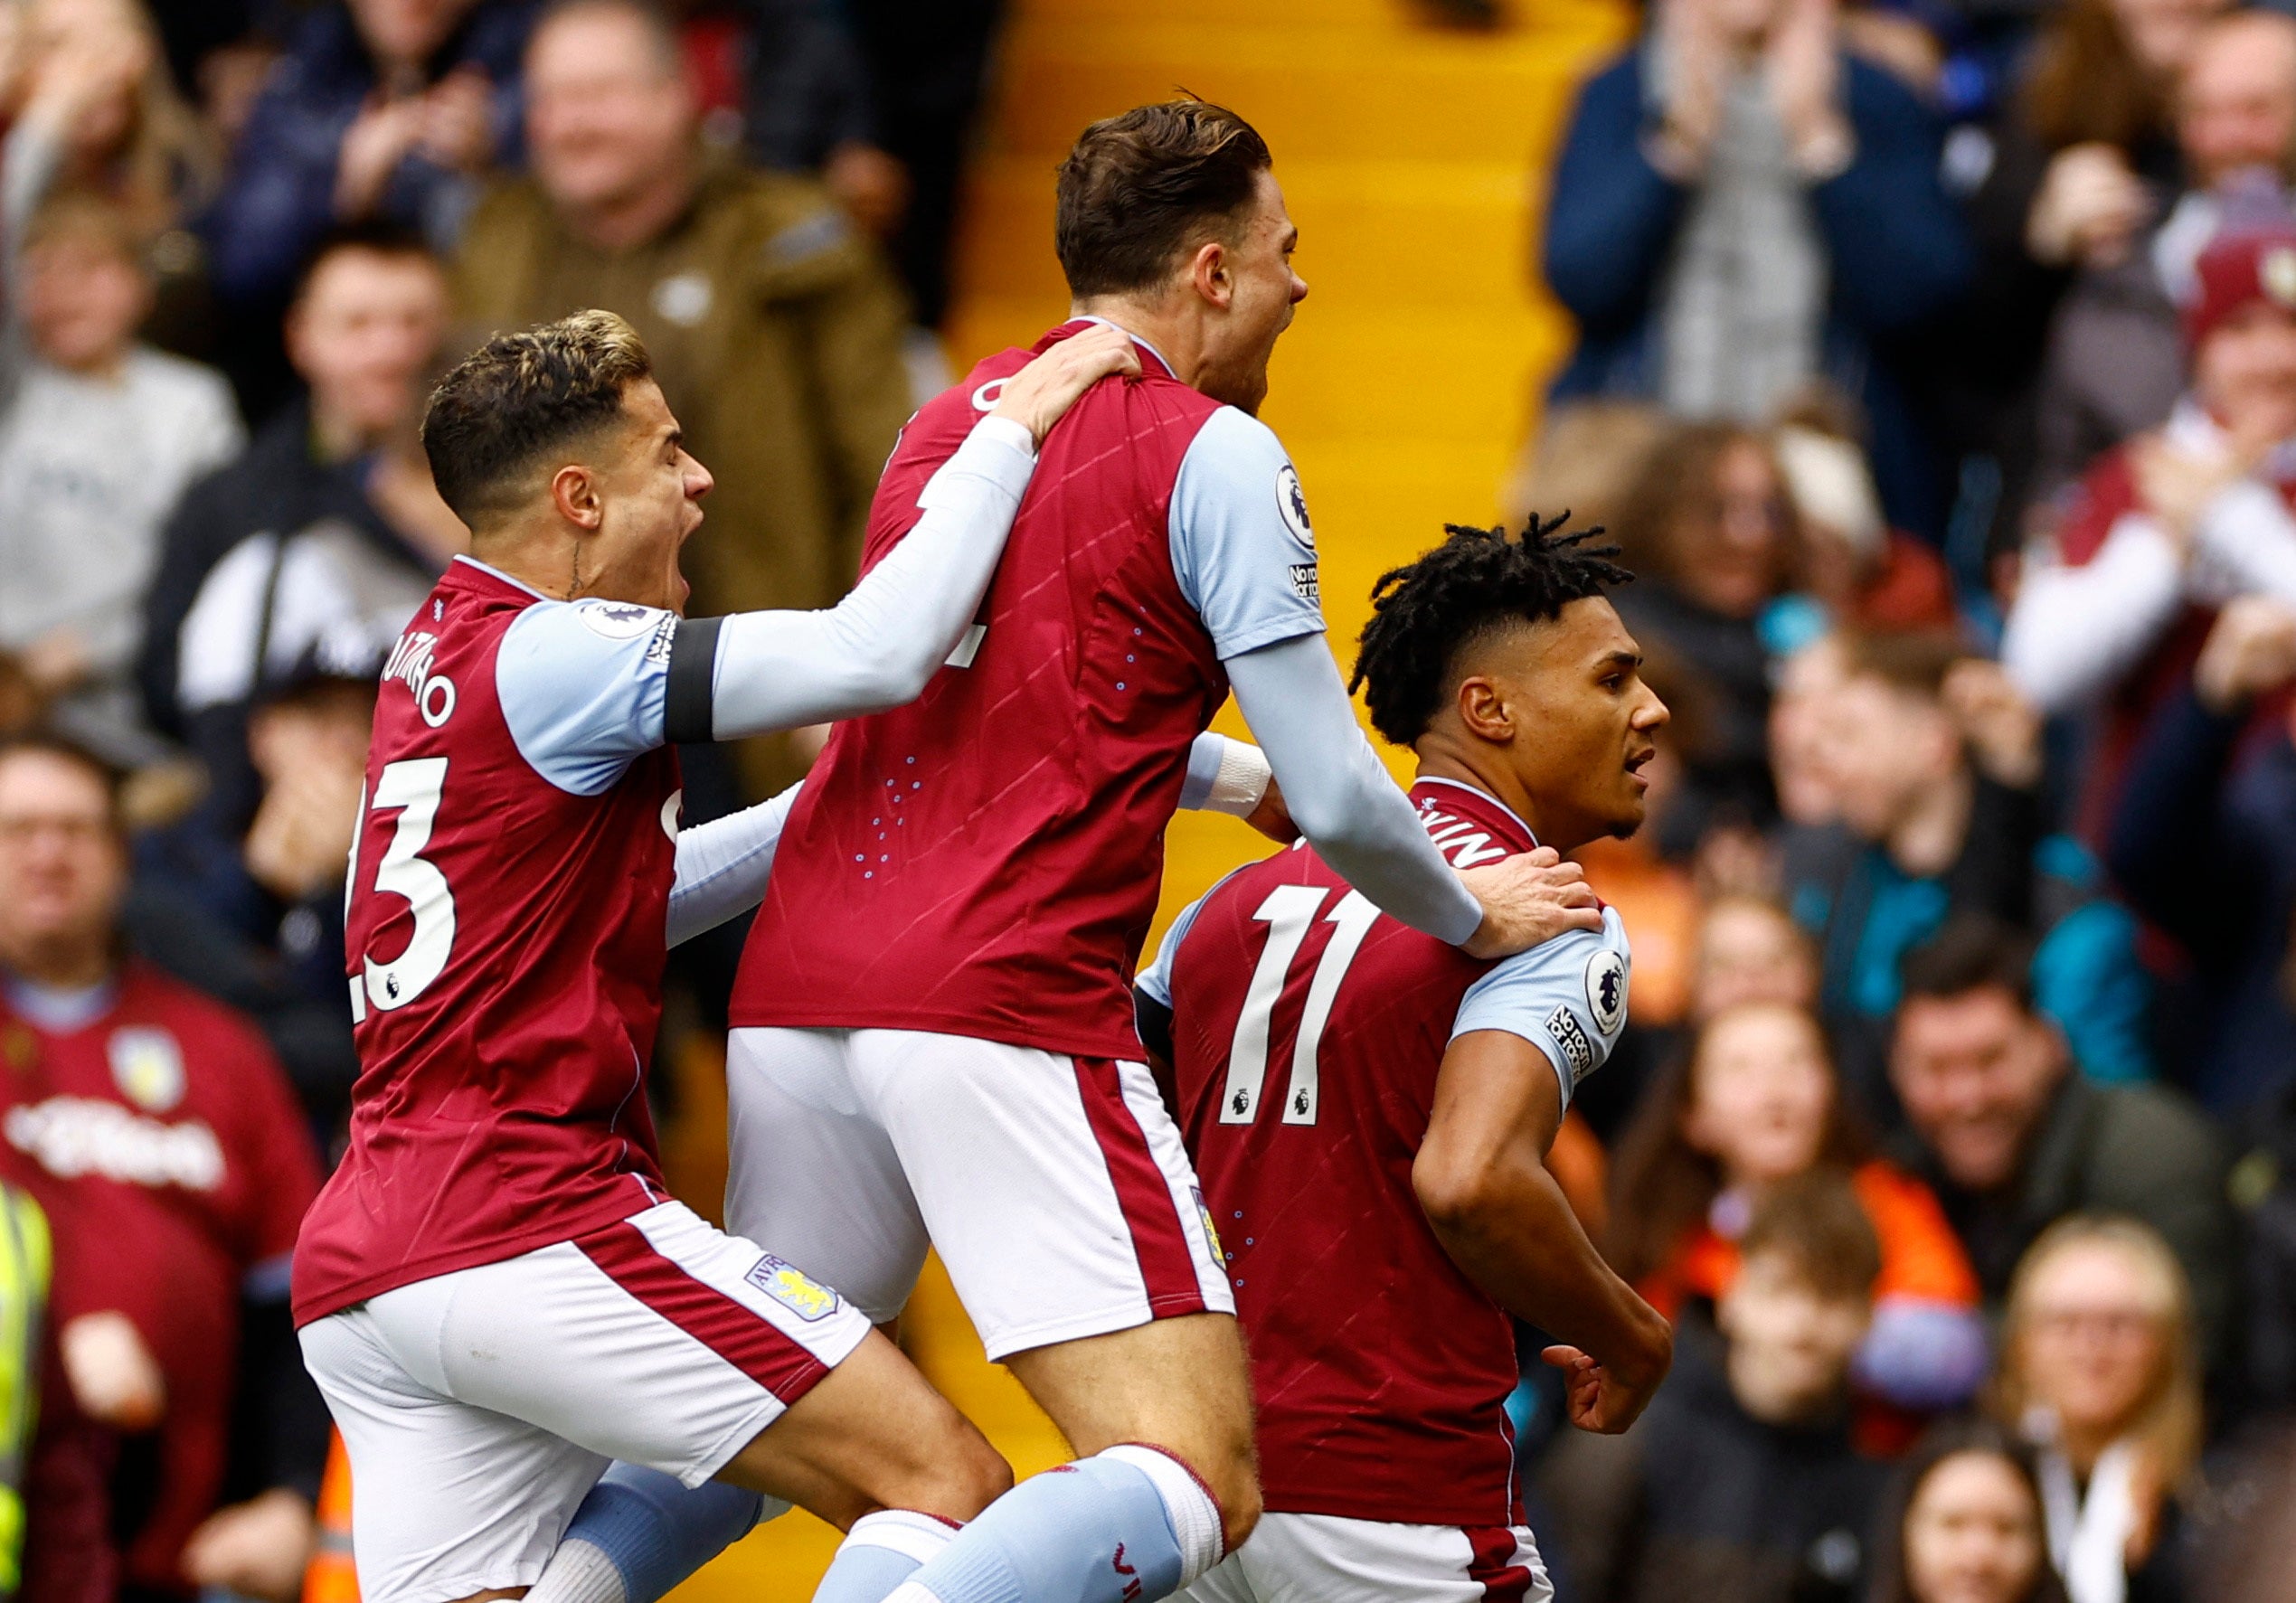 Ollie Watkins celebrates scoring Villa’s first goal with his teammates